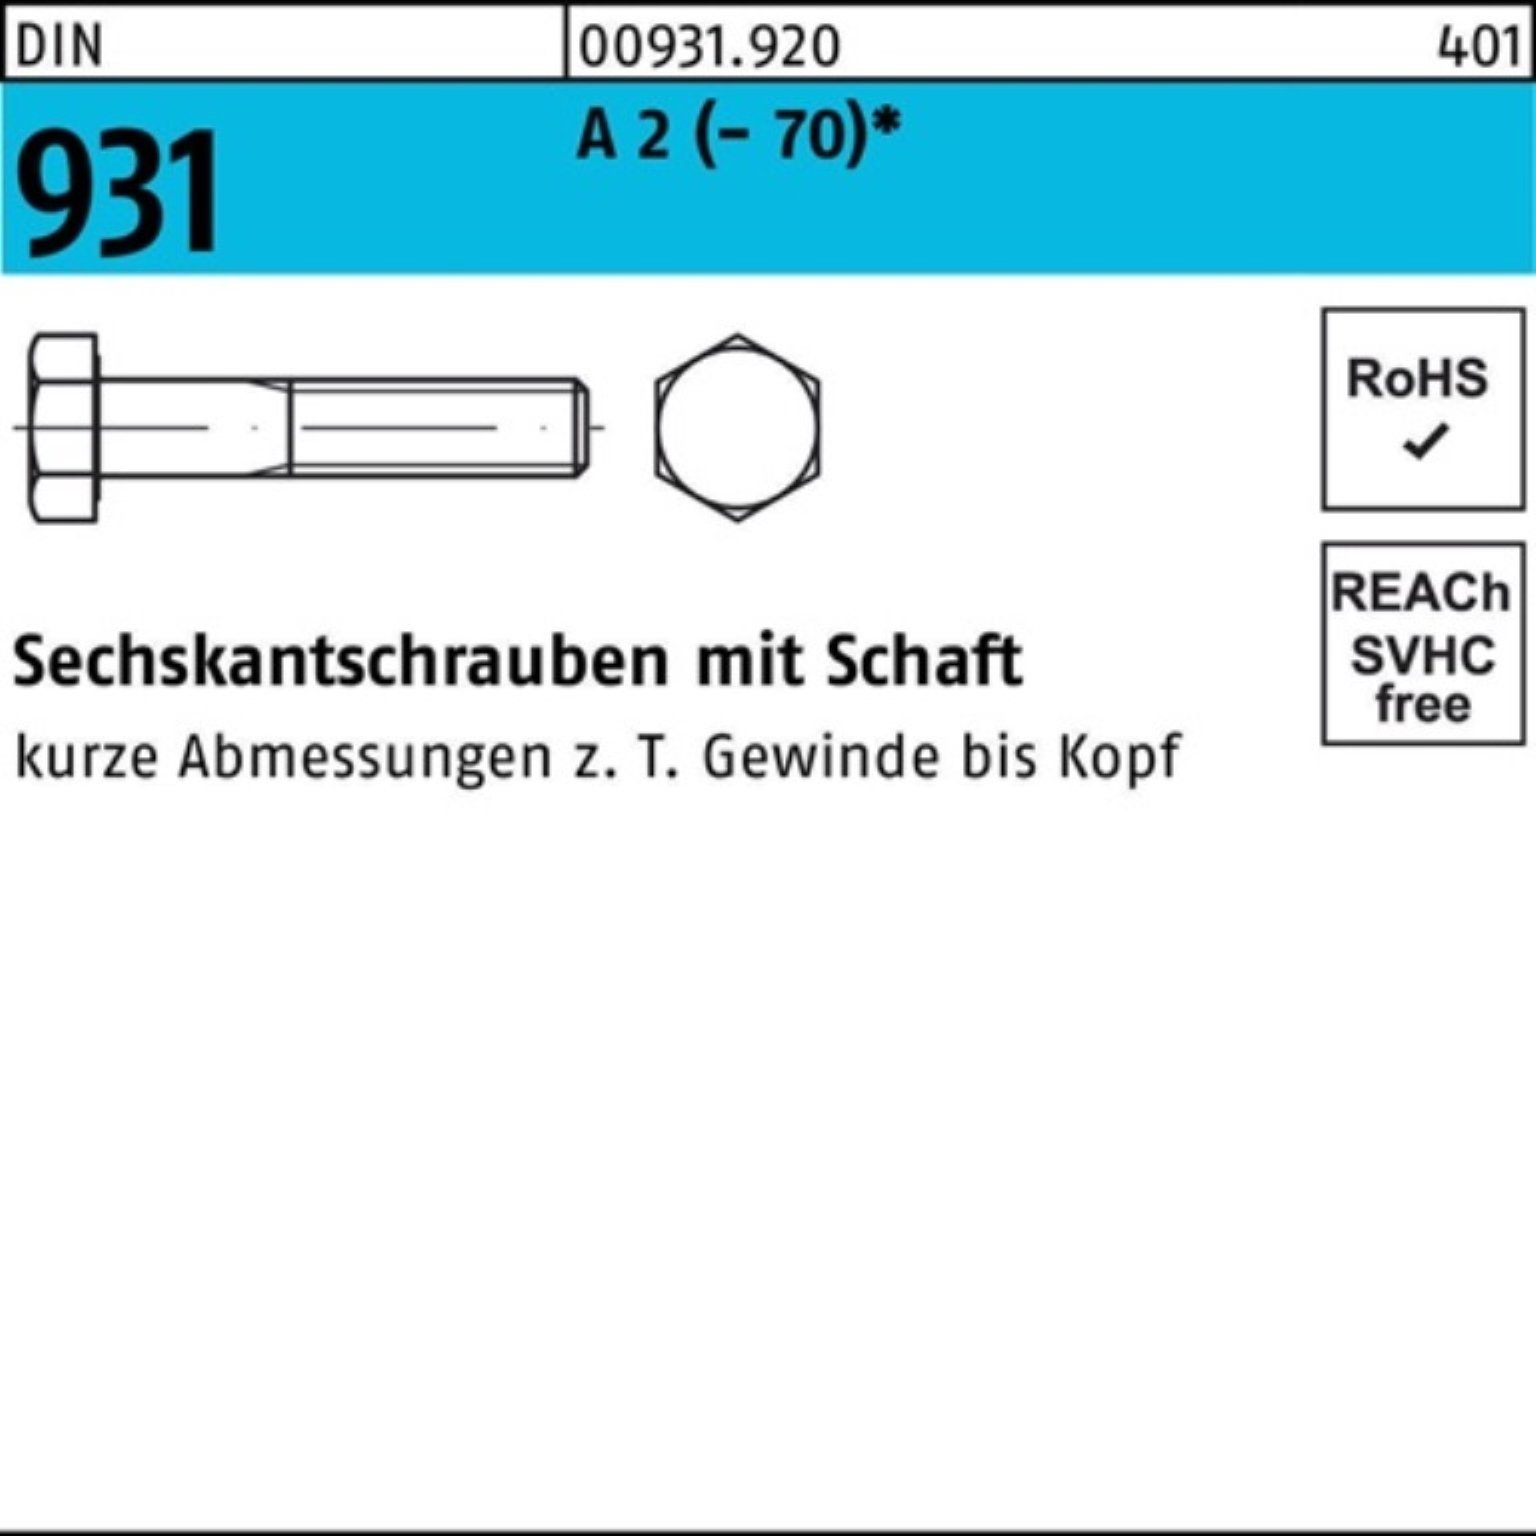 Reyher Sechskantschraube 100er Pack Sechskantschraube DIN 931 Schaft M10x 180 A 2 (70) 1 Stü | Schrauben